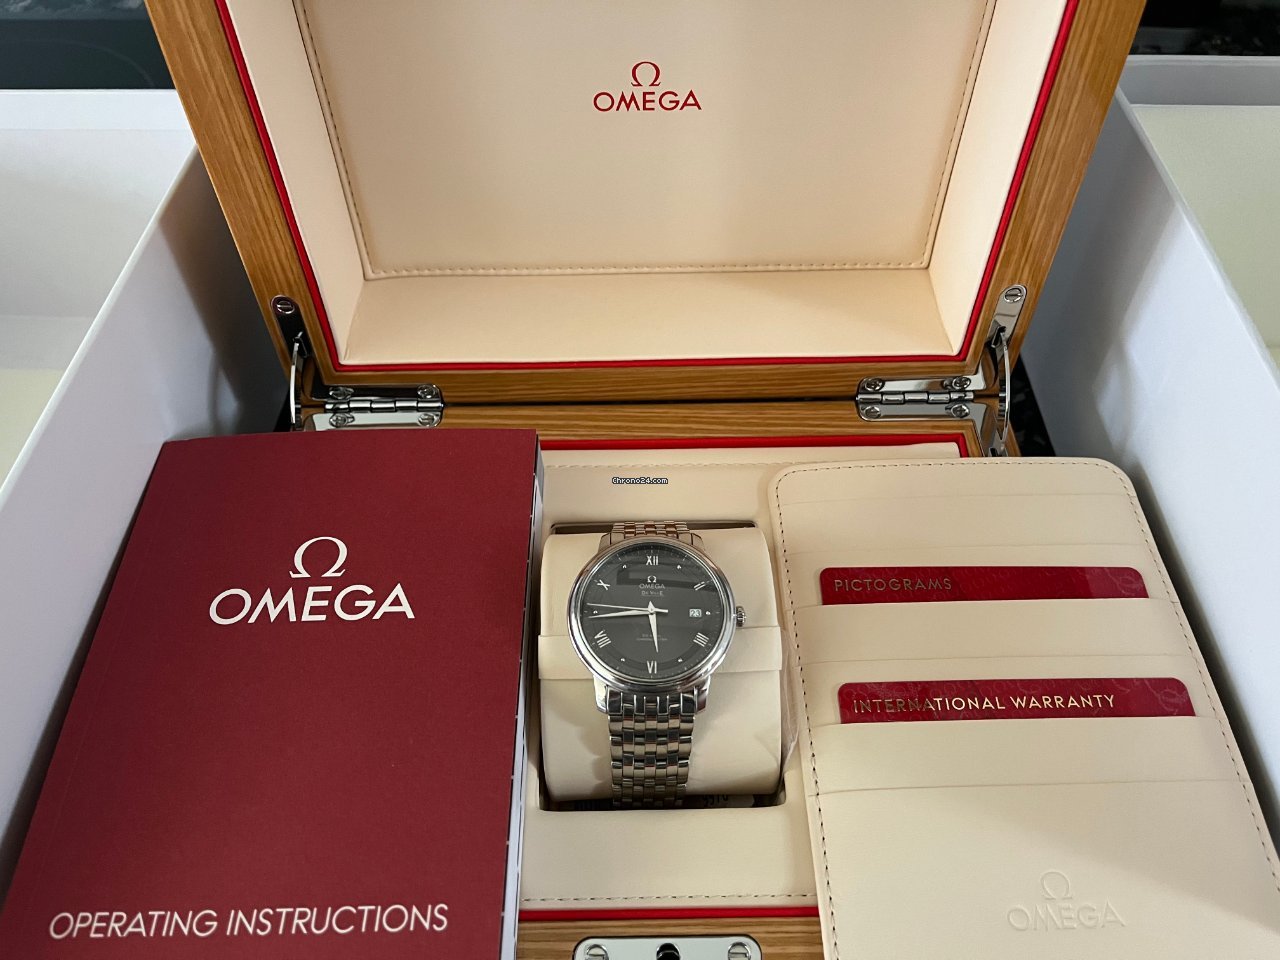 Omega De Ville Prestige Co-Axial Automatic Grey Dial Silver Steel Strap Watch for Men - 424.10.40.20.06.001